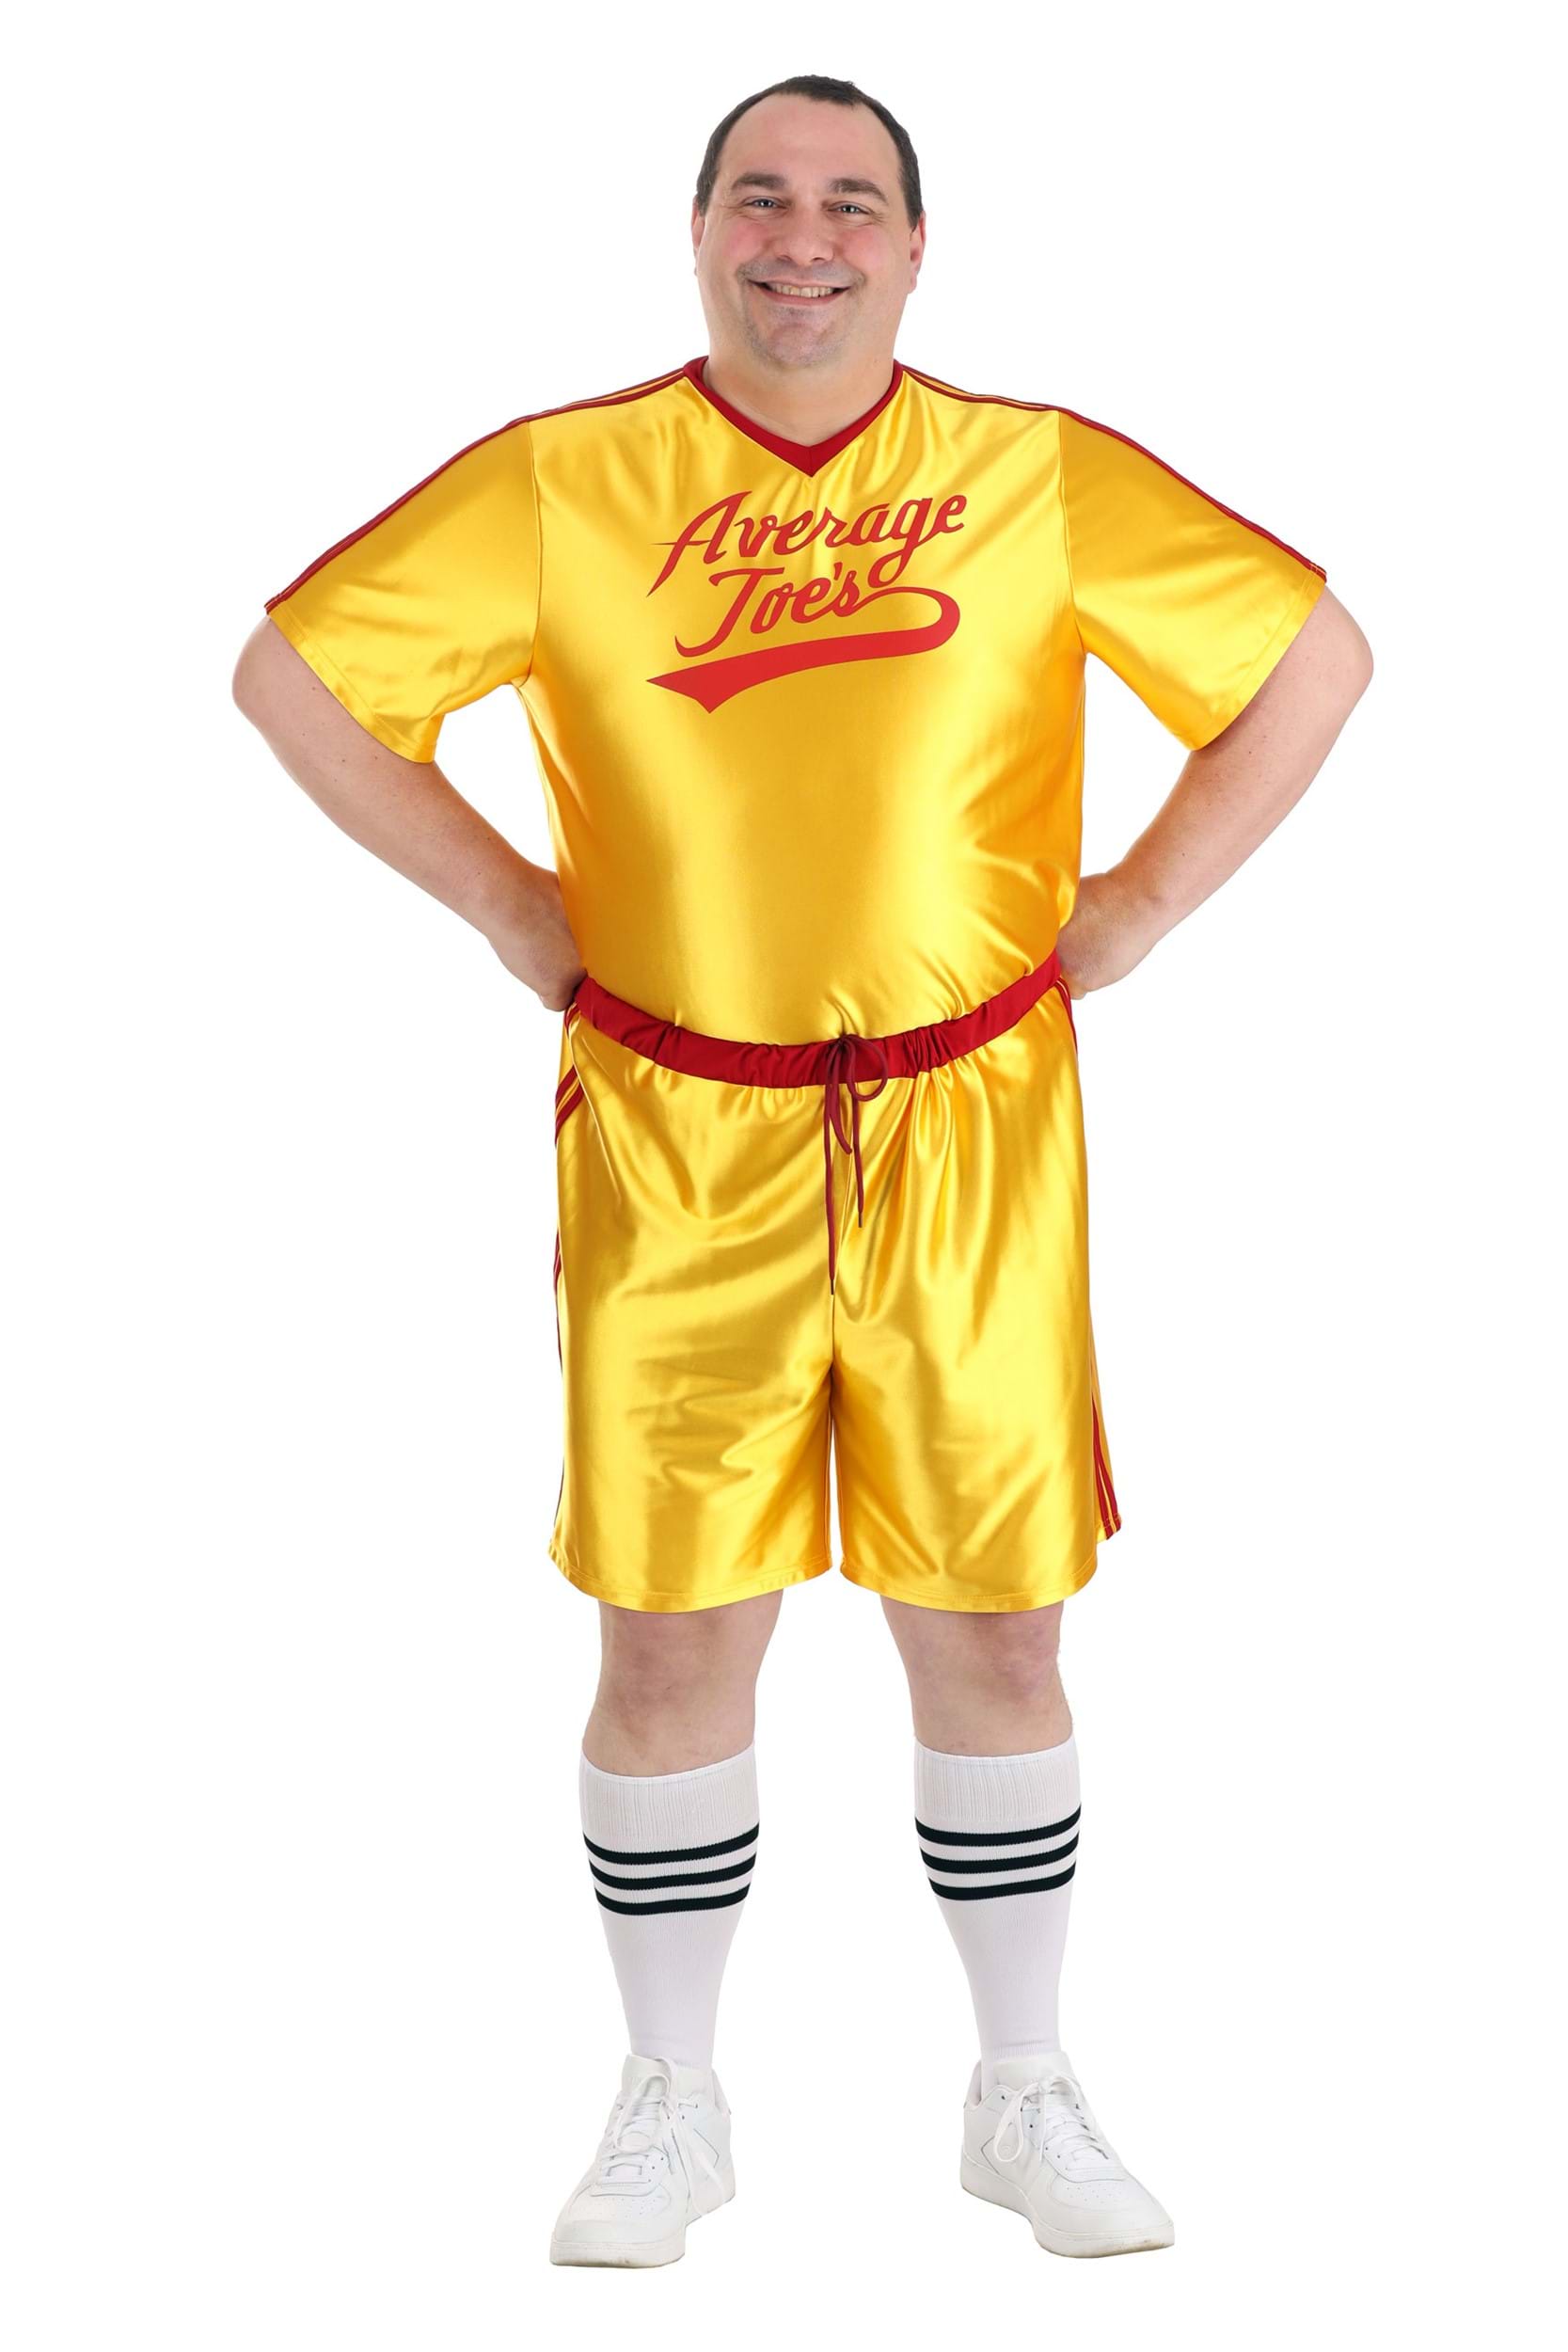 Photos - Fancy Dress FUN Costumes Dodgeball Average Joe's Plus Size Costume Orange/Red